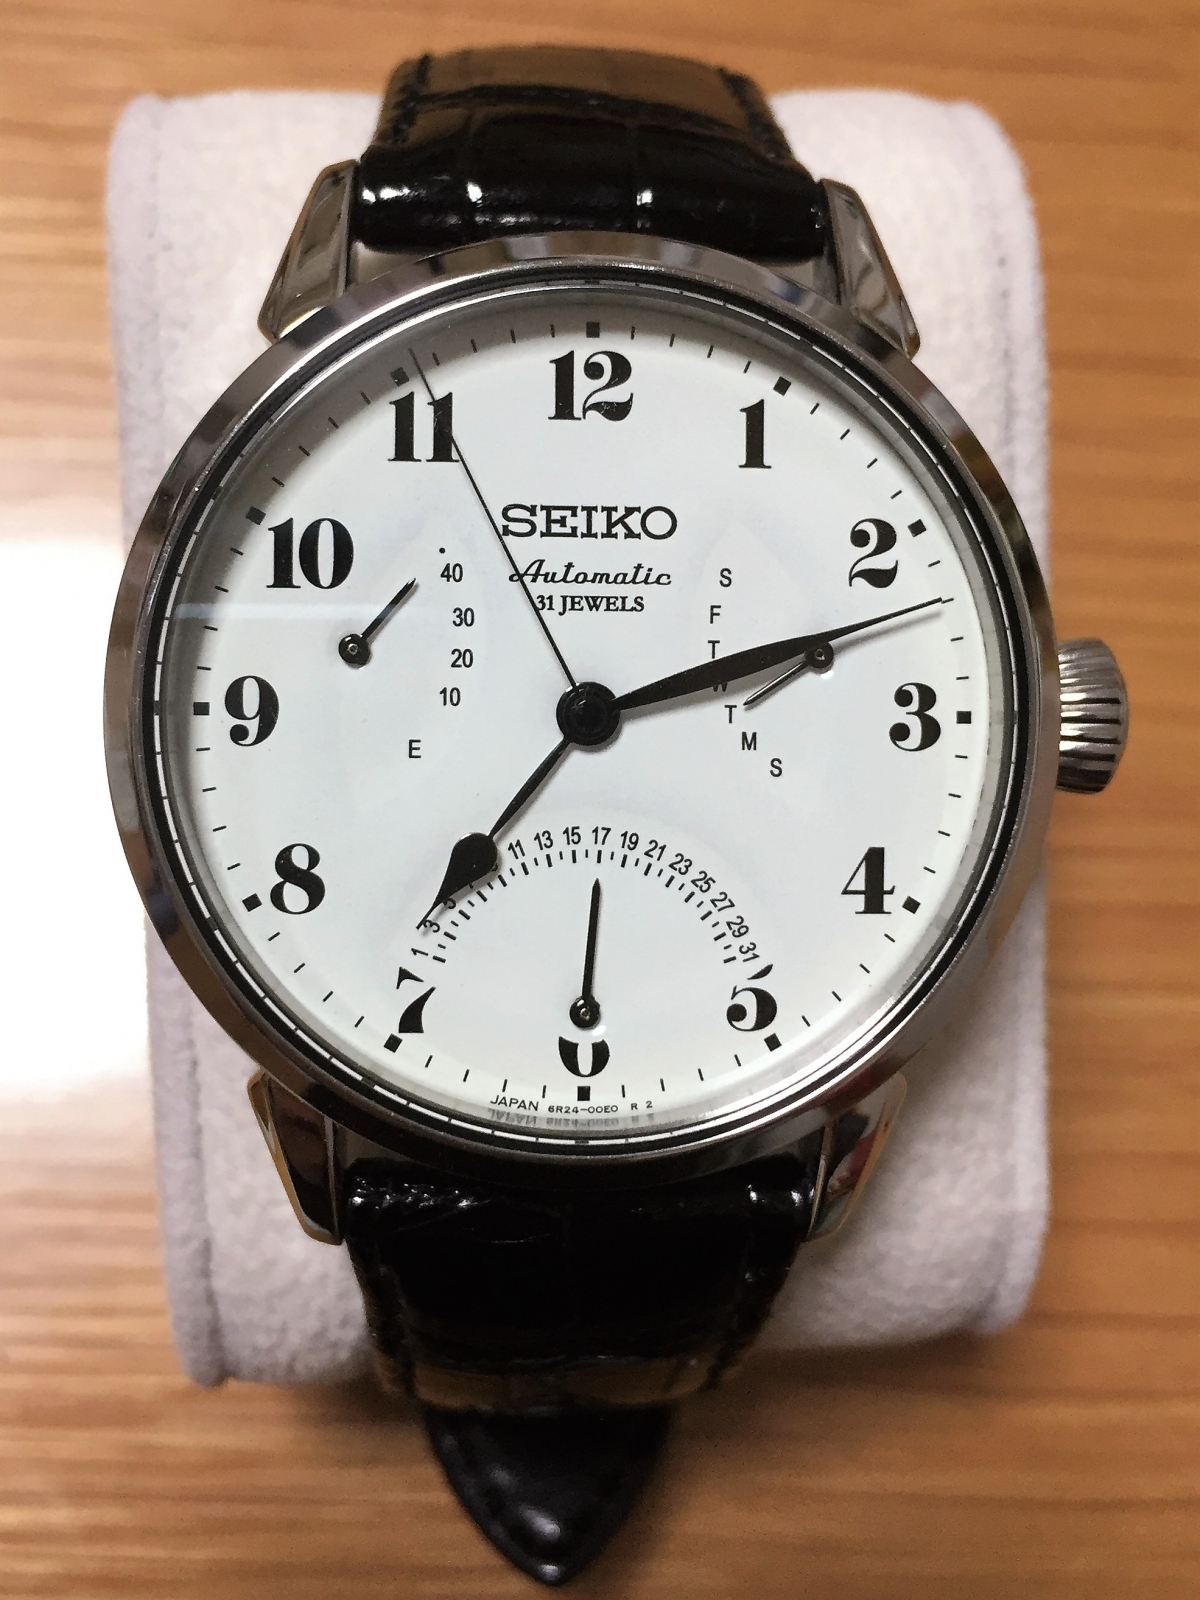 SEIKO プレザージュ SARD007 琺瑯ダイヤル - 時計